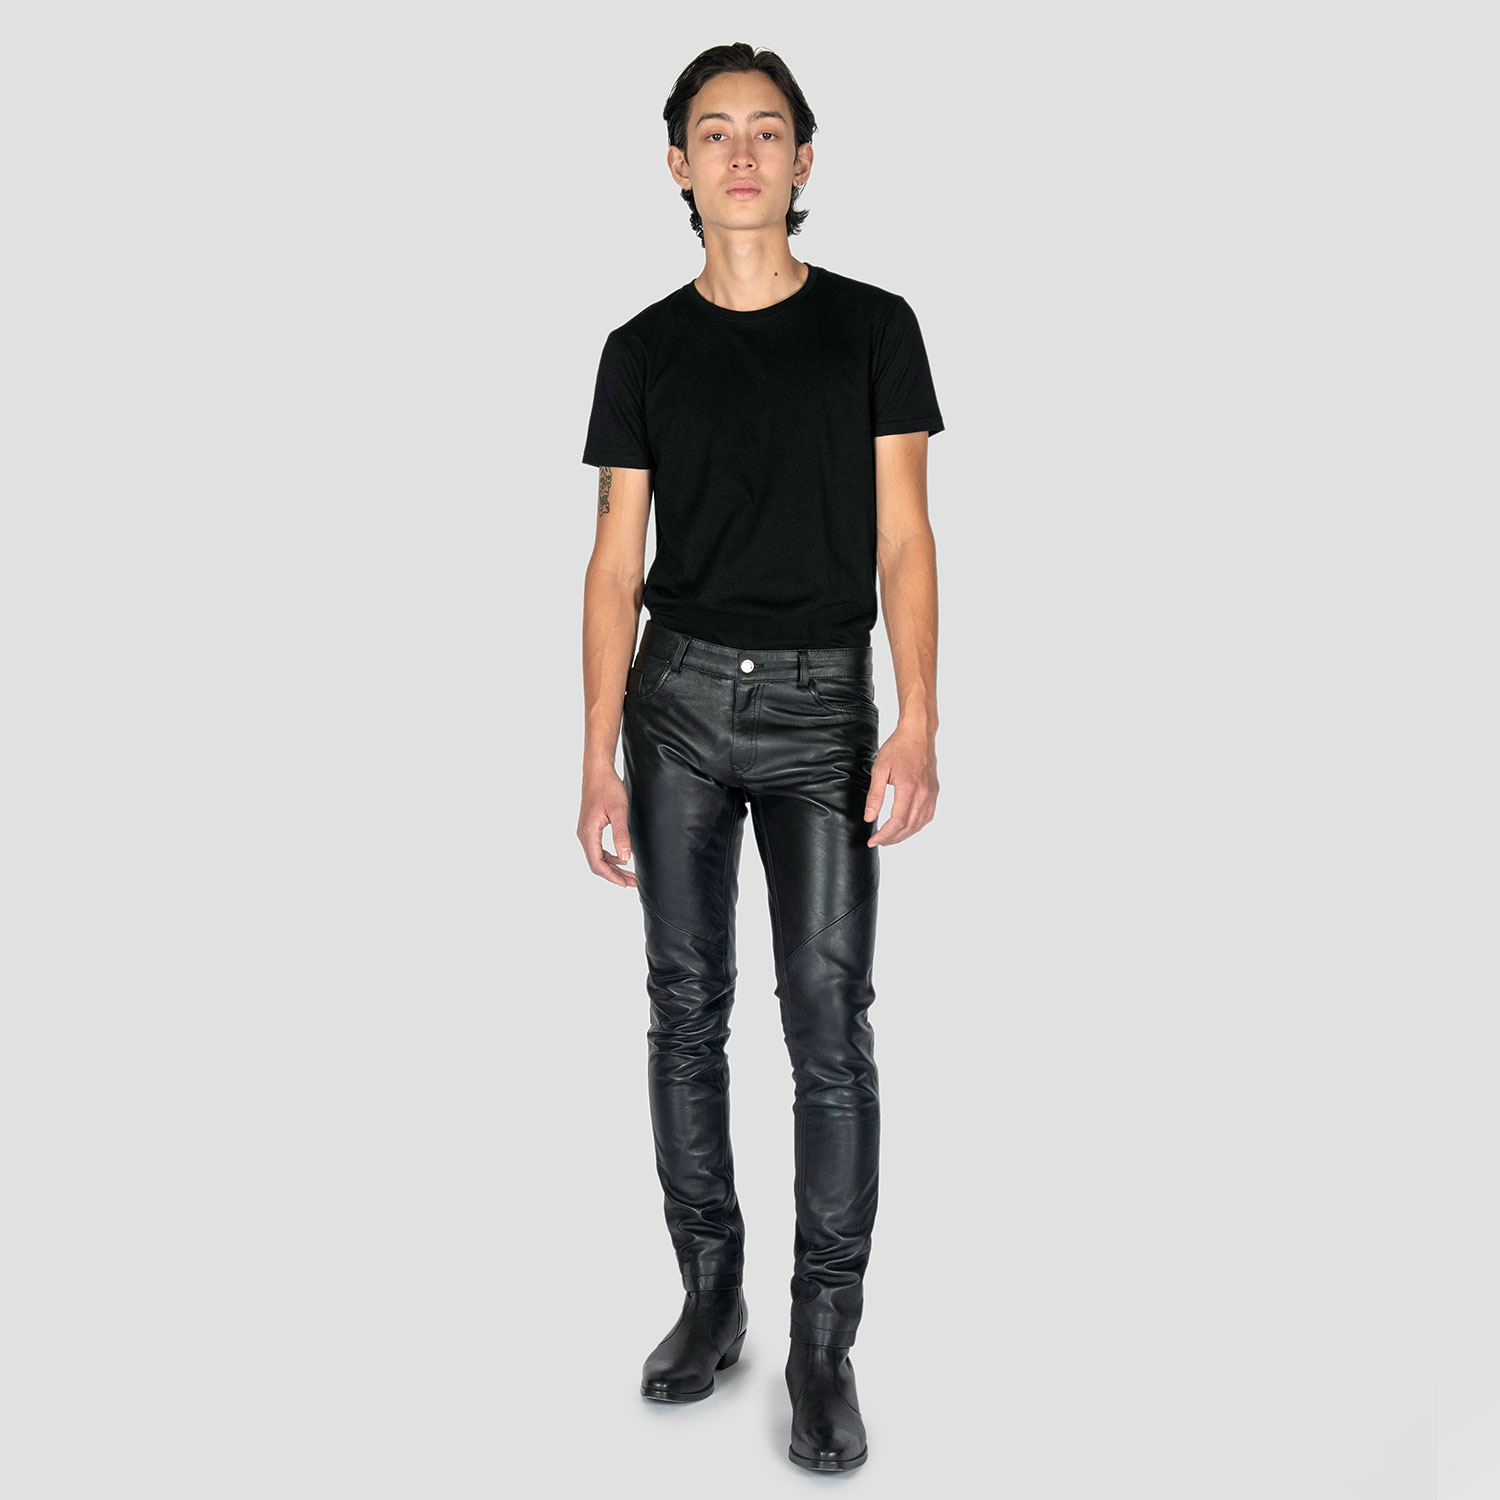 Black Men's black leather jeans